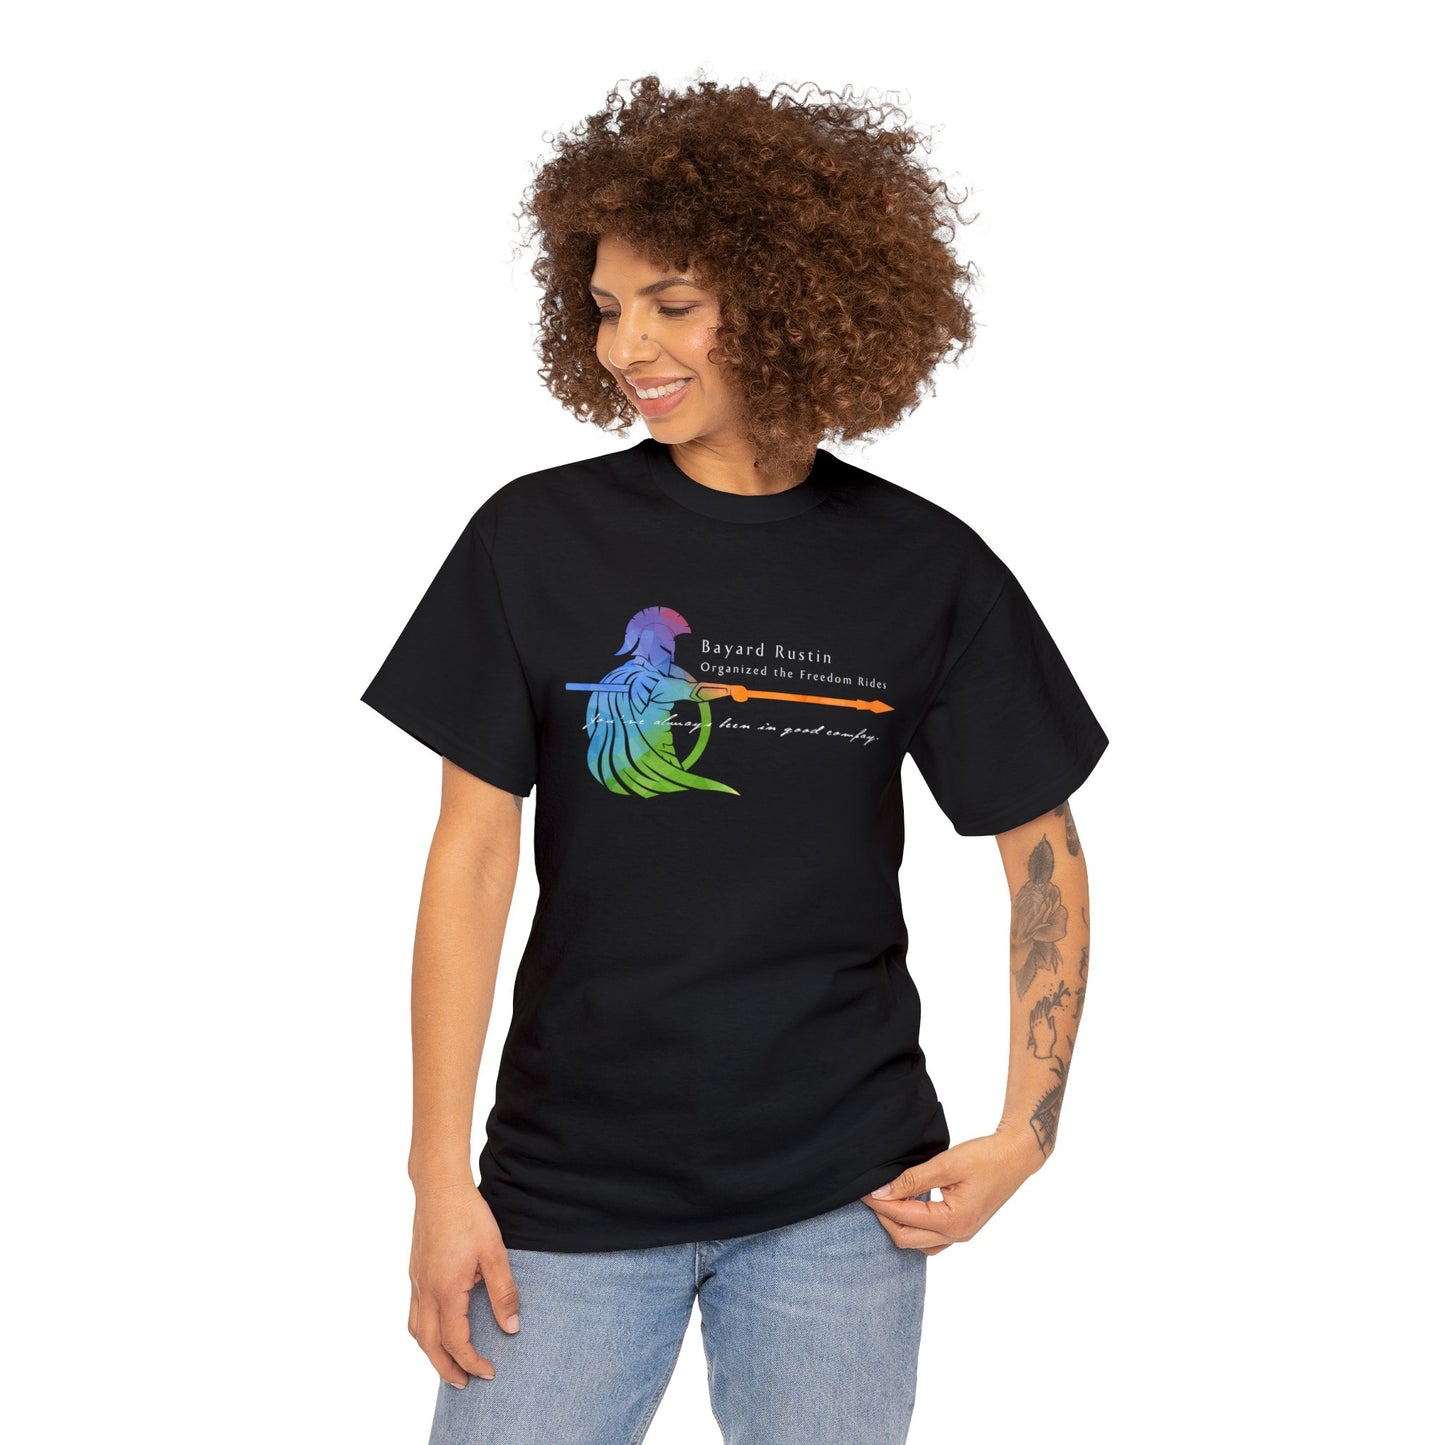 Bayard Rustin | Organized the Freedom Rides | Pride T-Shirt